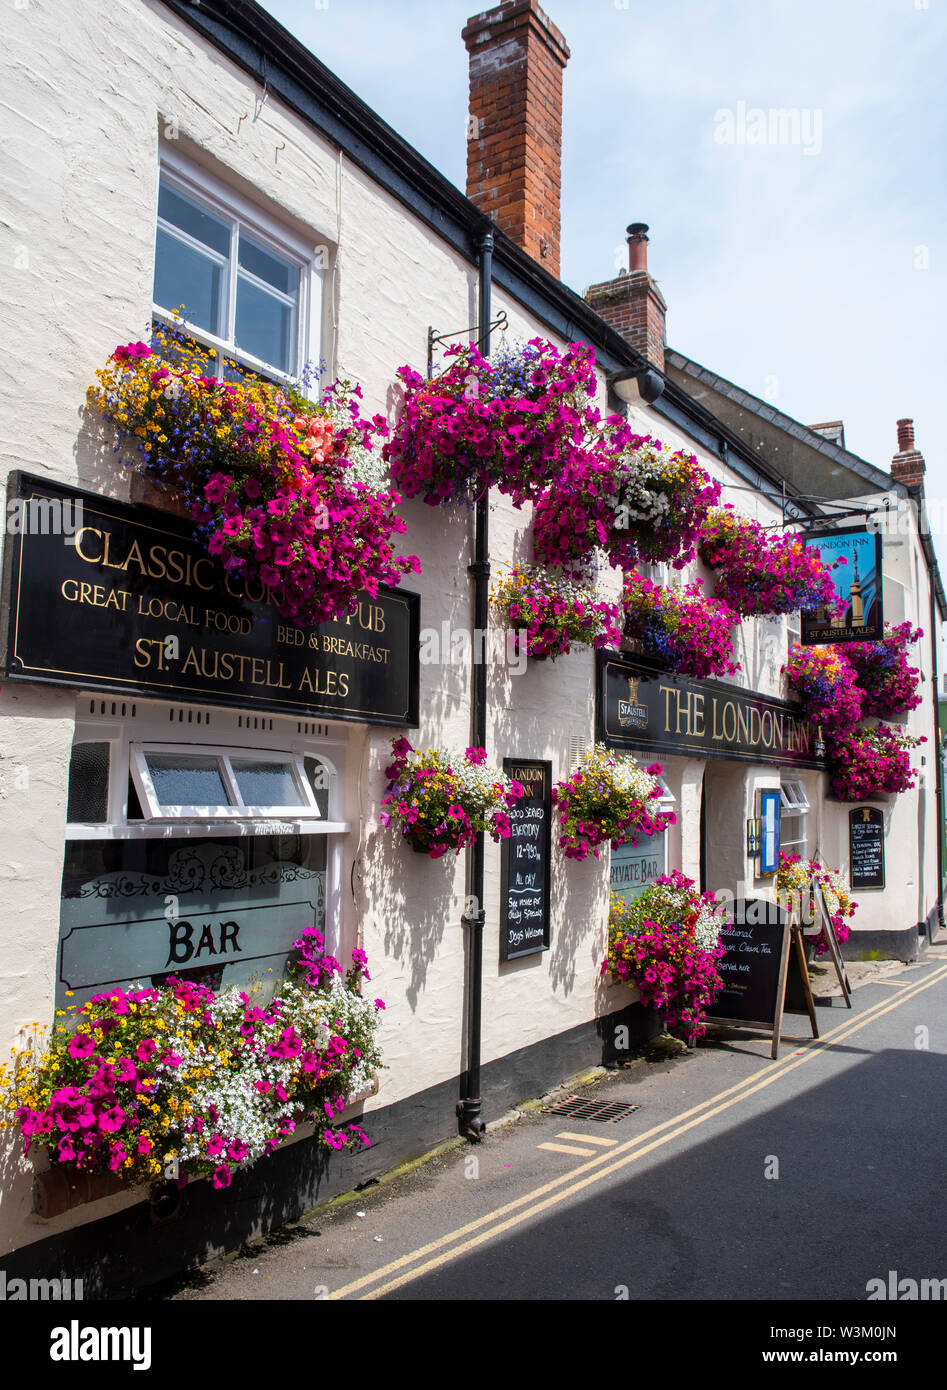 Das London Inn Pub in Padstow, Cornwall, England, Großbritannien Stockfoto